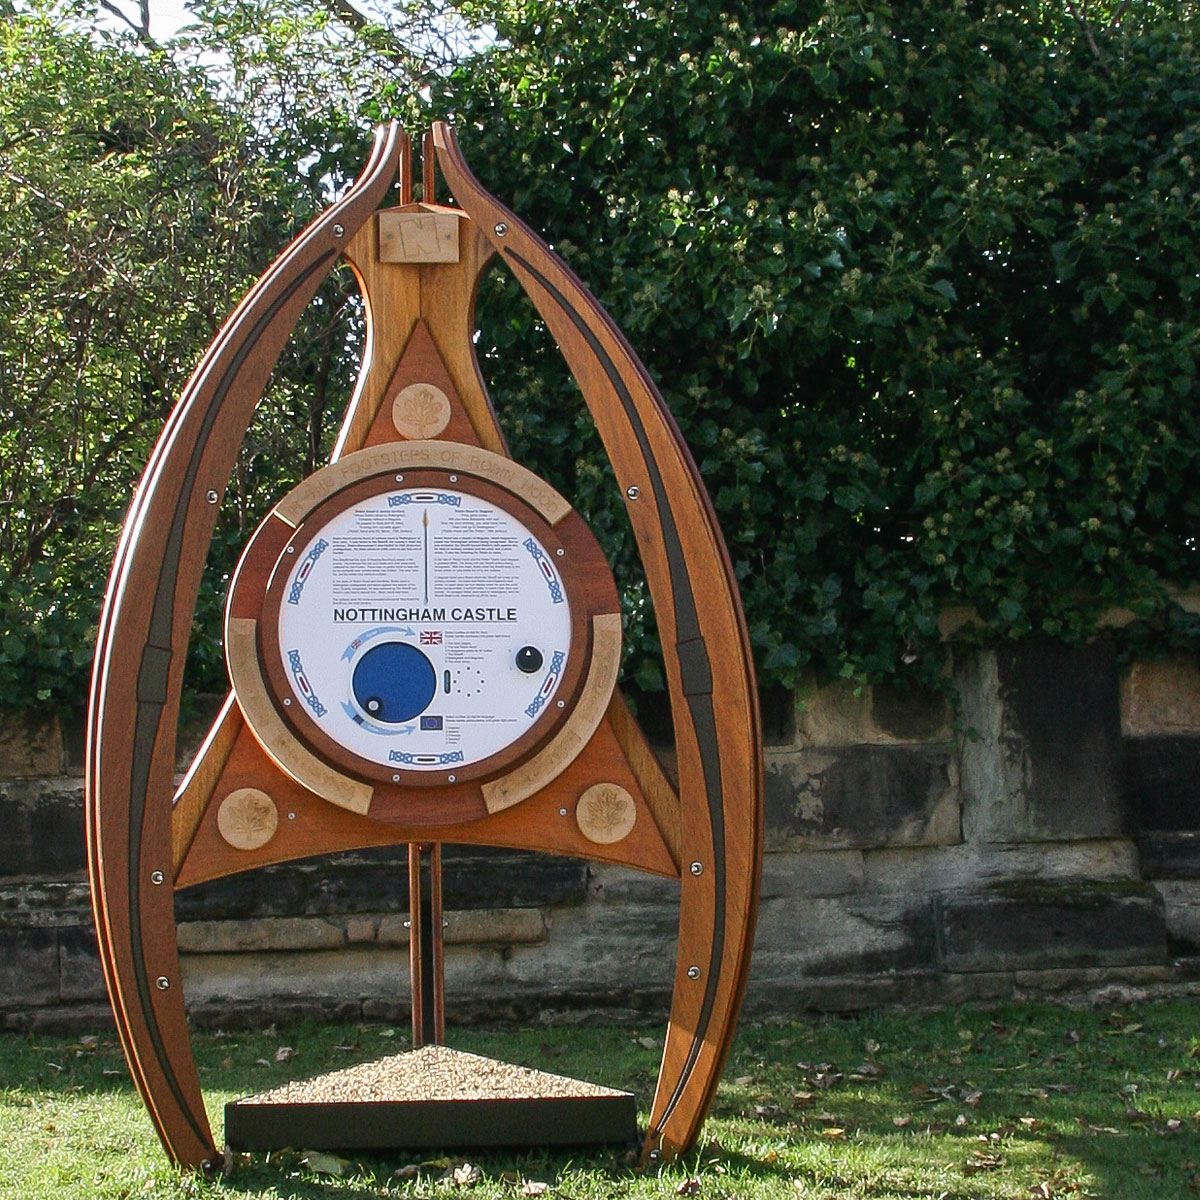 Robin Hood Audio Trail tripod interpretation piece at Nottingham Castle